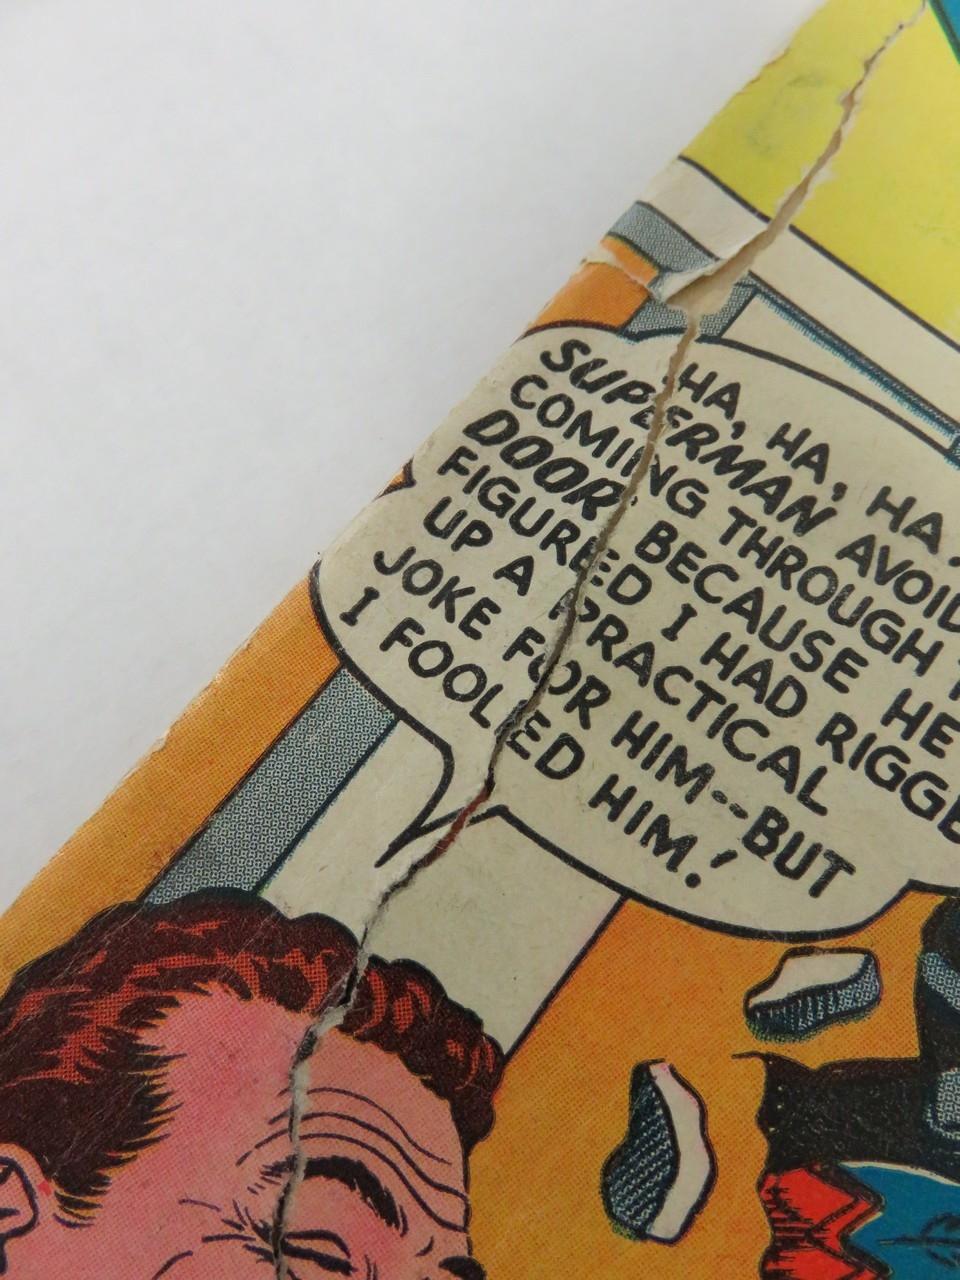 Superman #95 (1955) Golden Age Comic